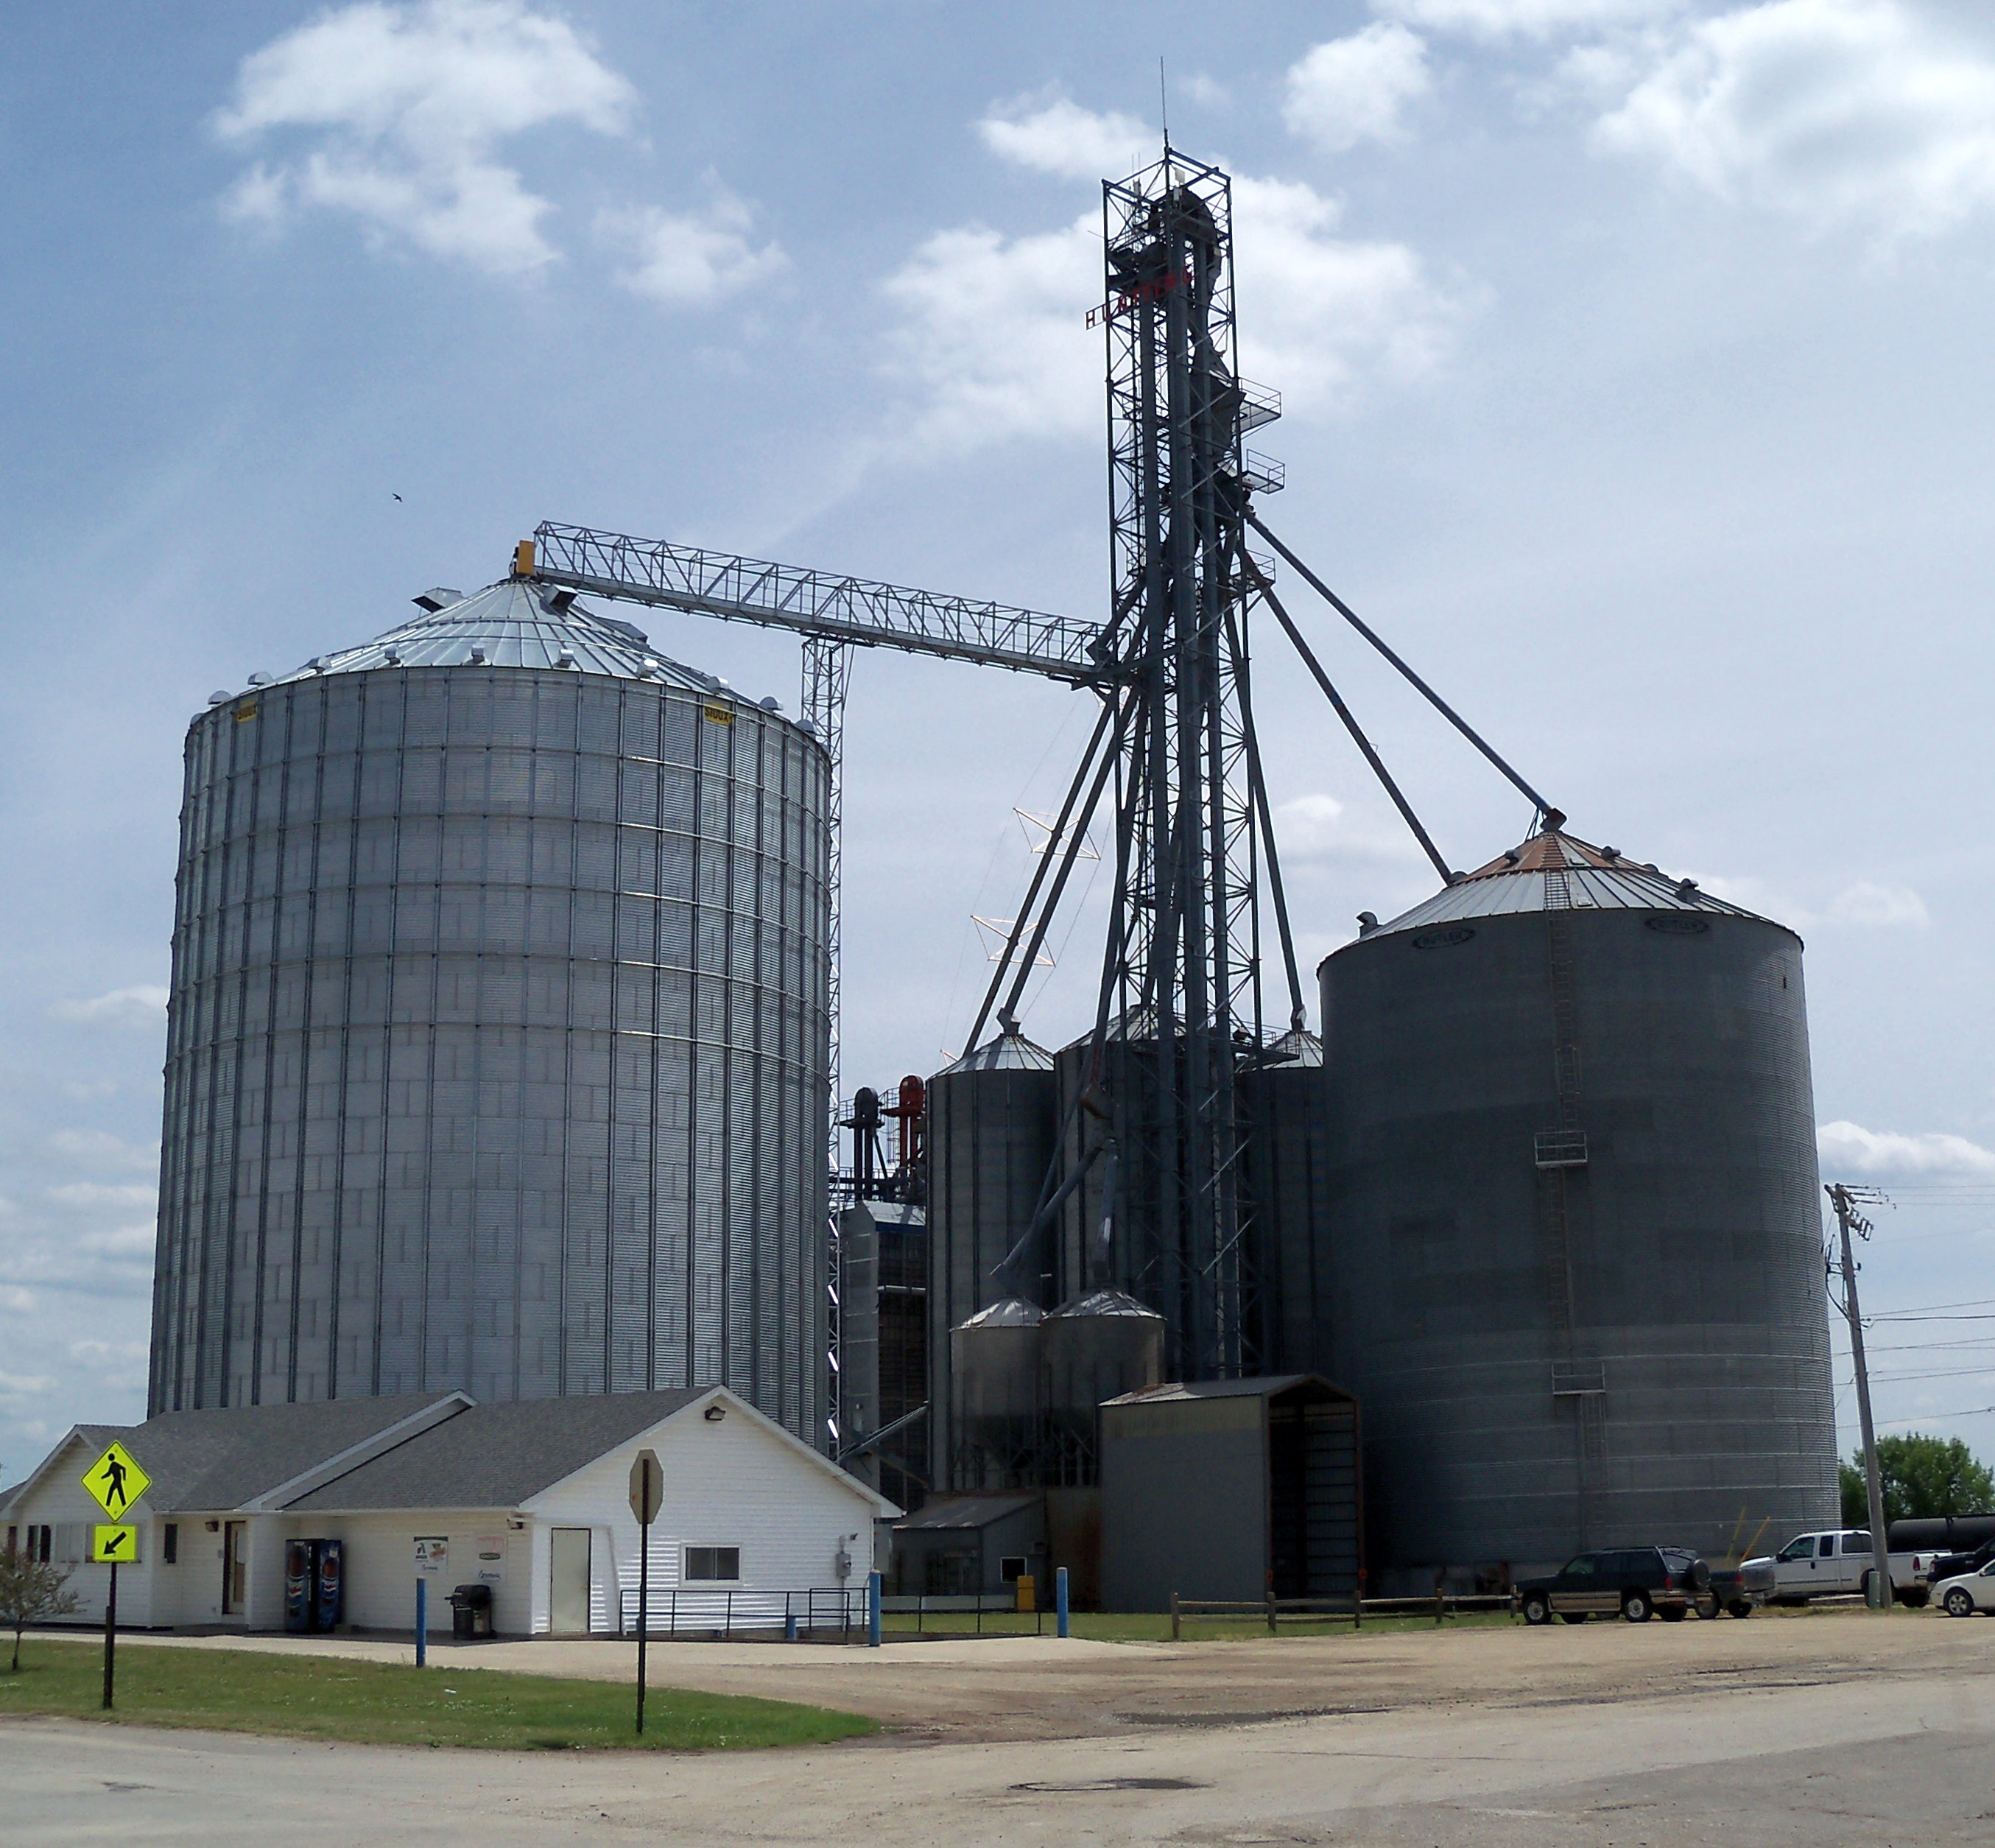 File:Grain elevator Claremont, Minnesota 5.jpg - Wikimedia Commons